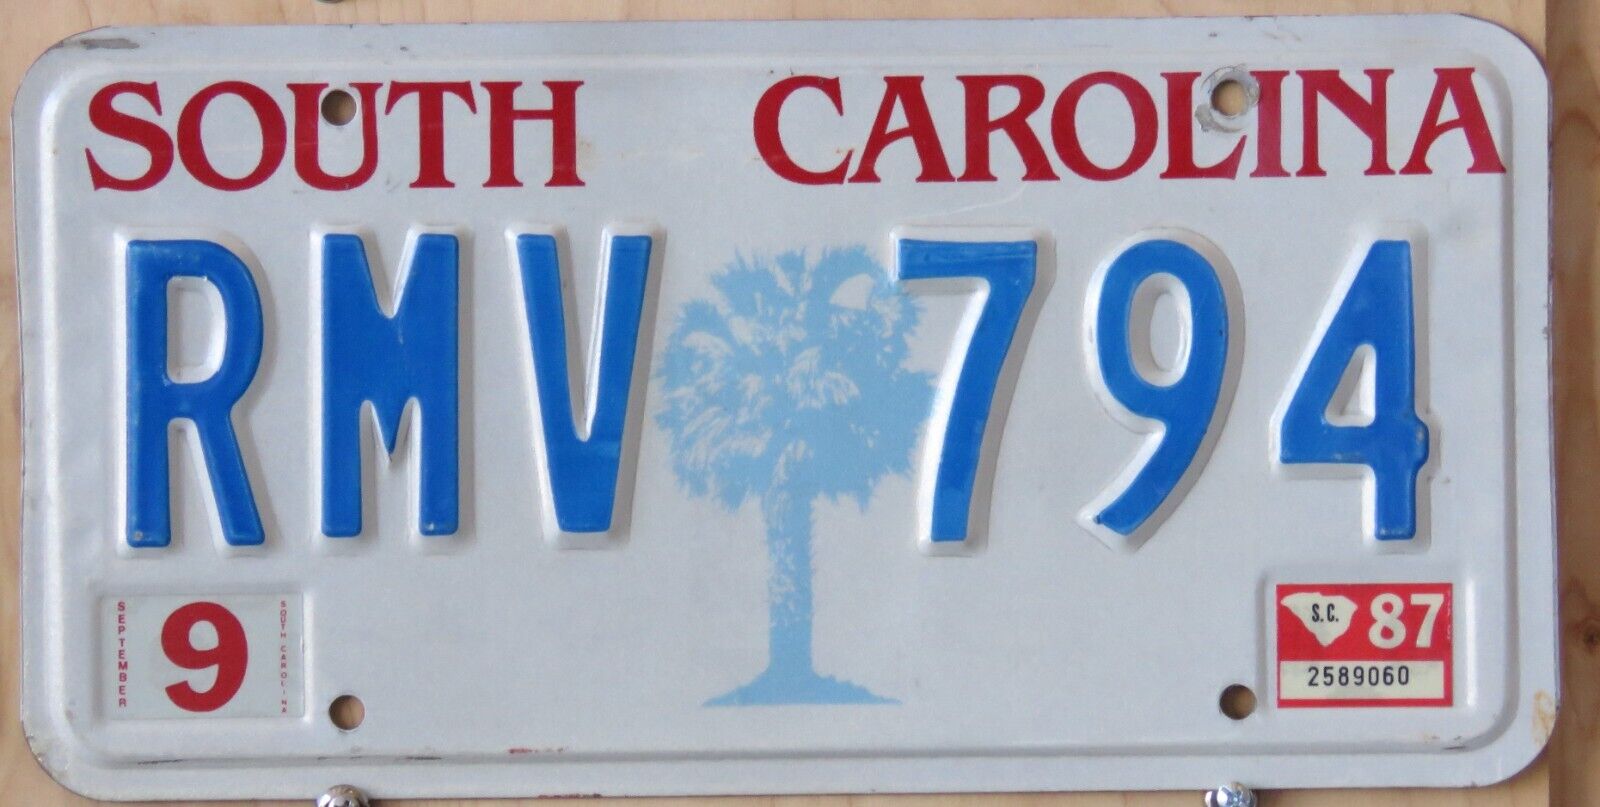 SOUTH CAROLINA license plate  1977 - 2013  PICK ONE